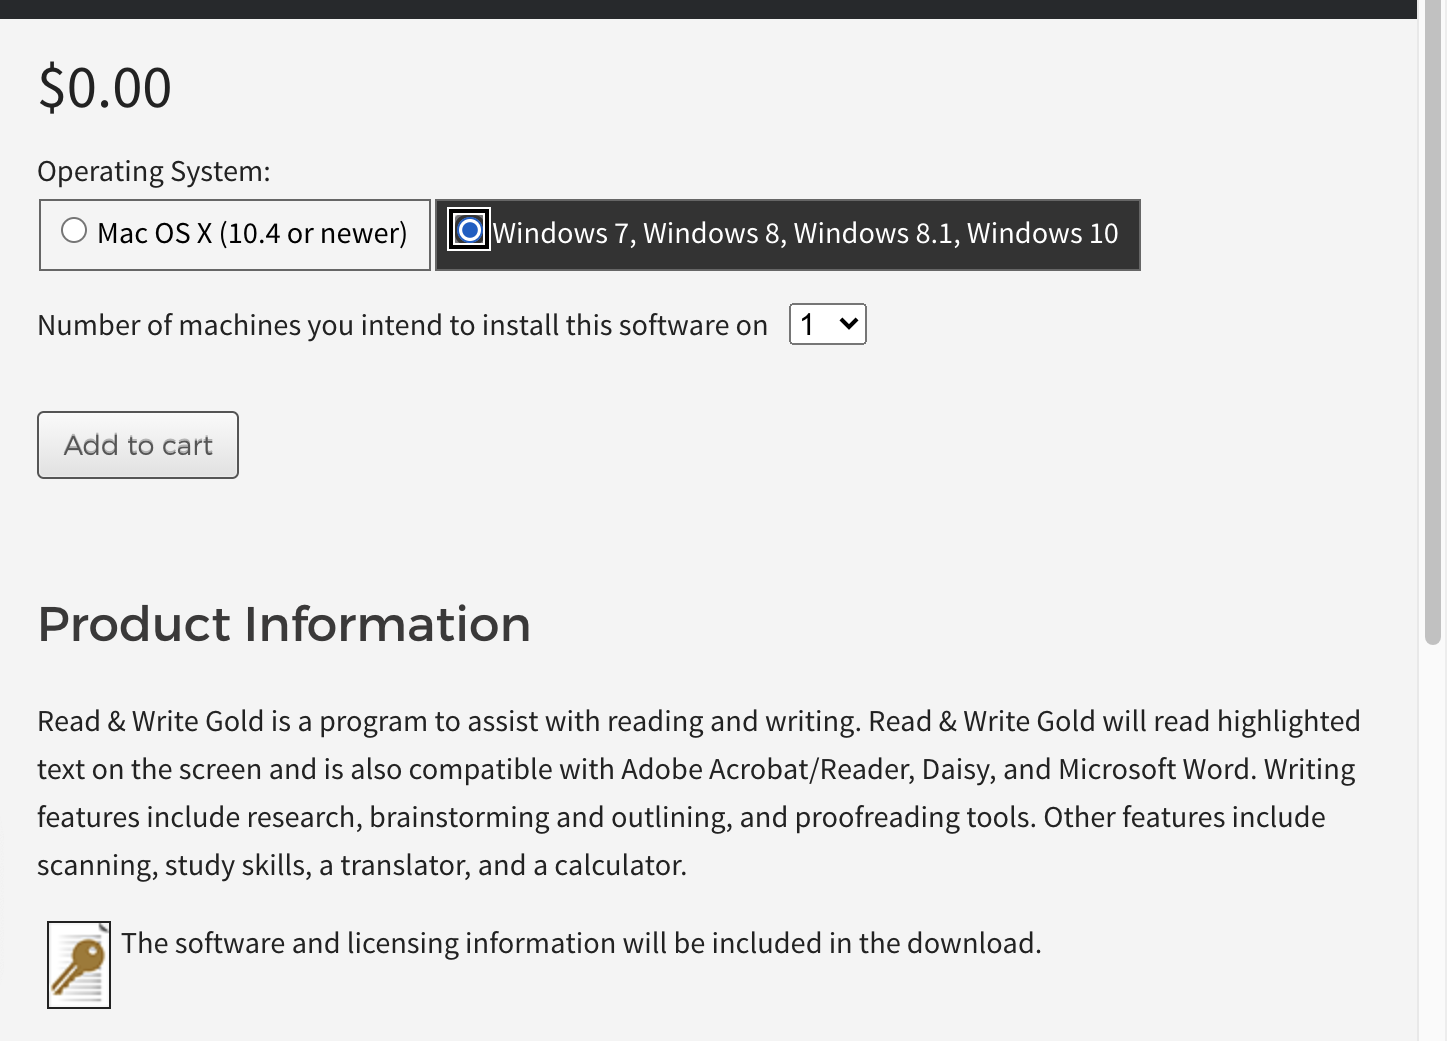 Operating System: Windows 7, Windows 8, Windows 8.1, Windows 10 radio button selected